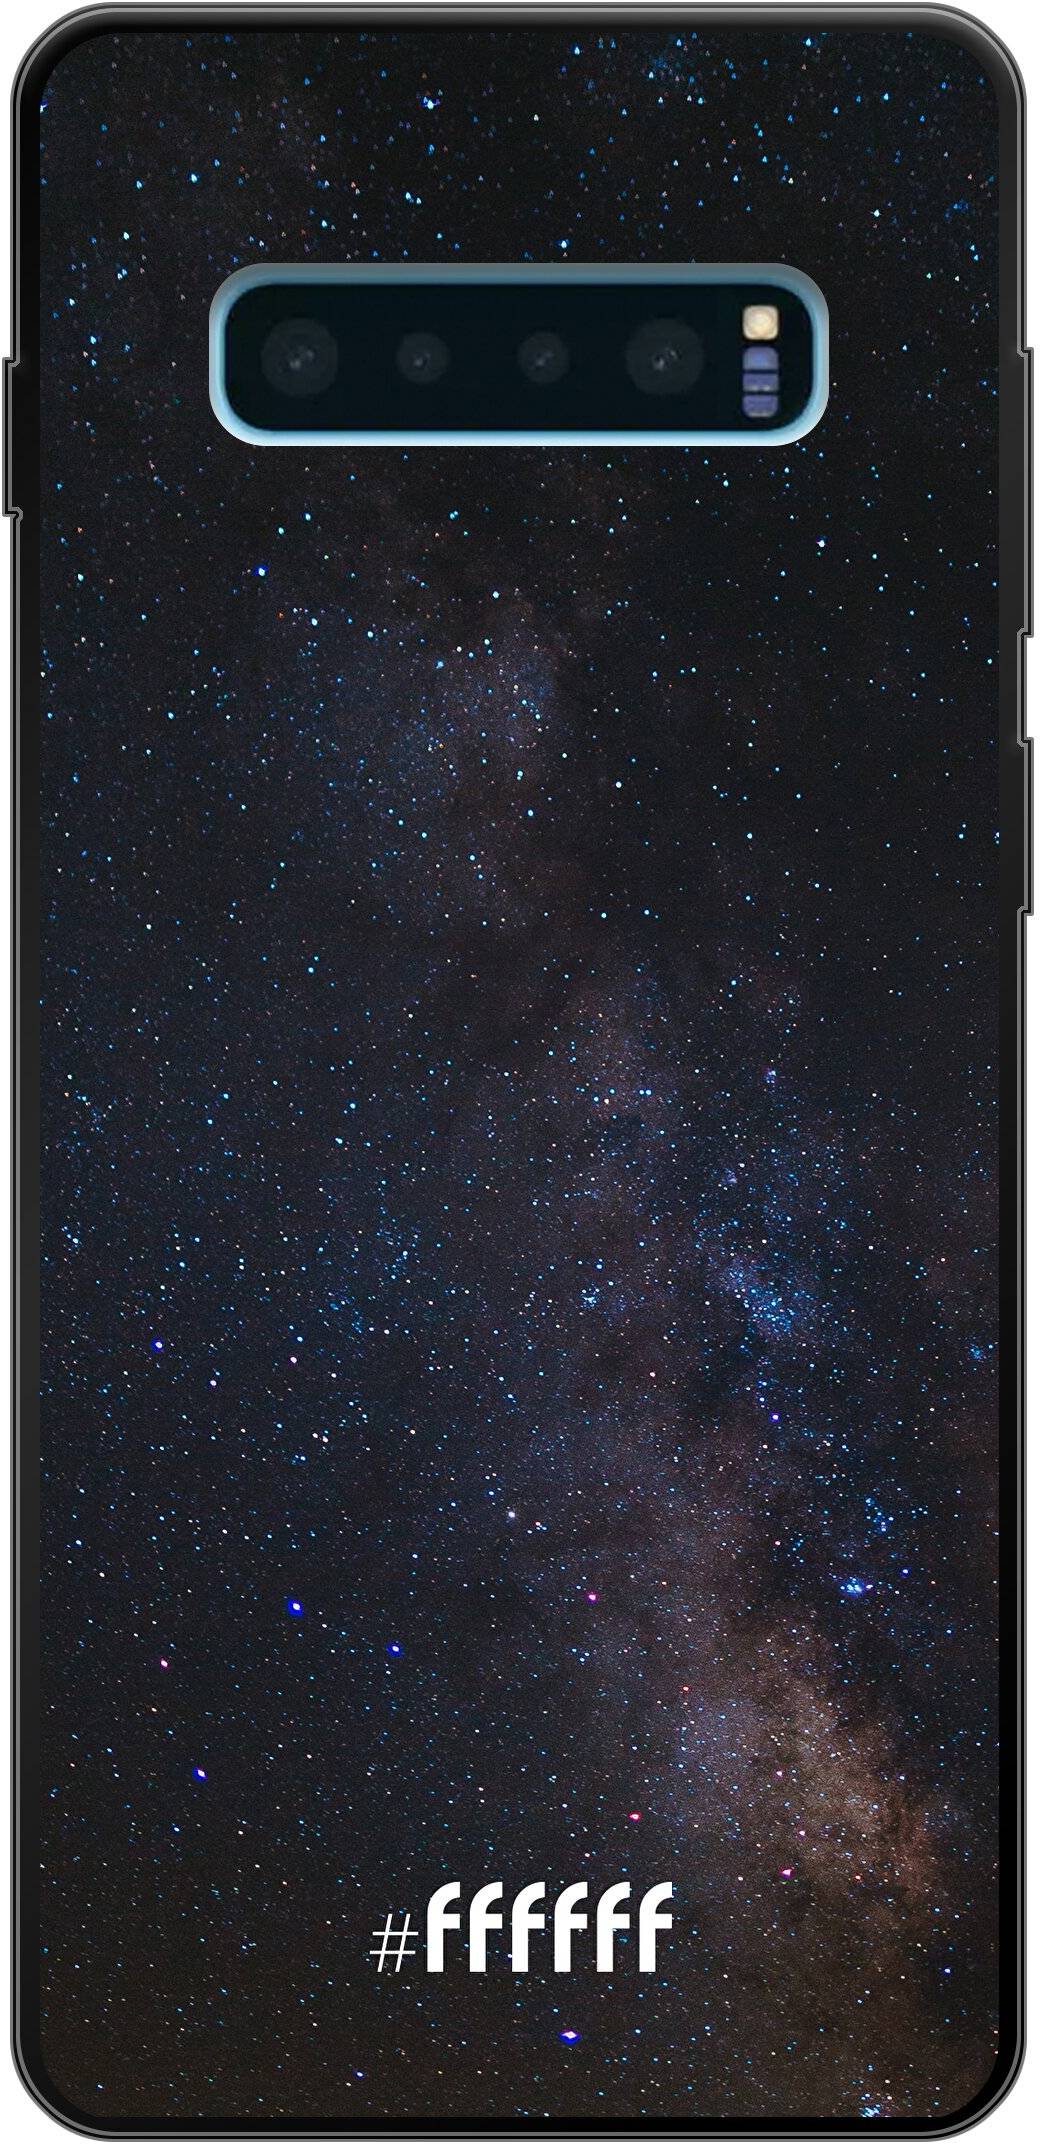 Dark Space Galaxy S10 Plus